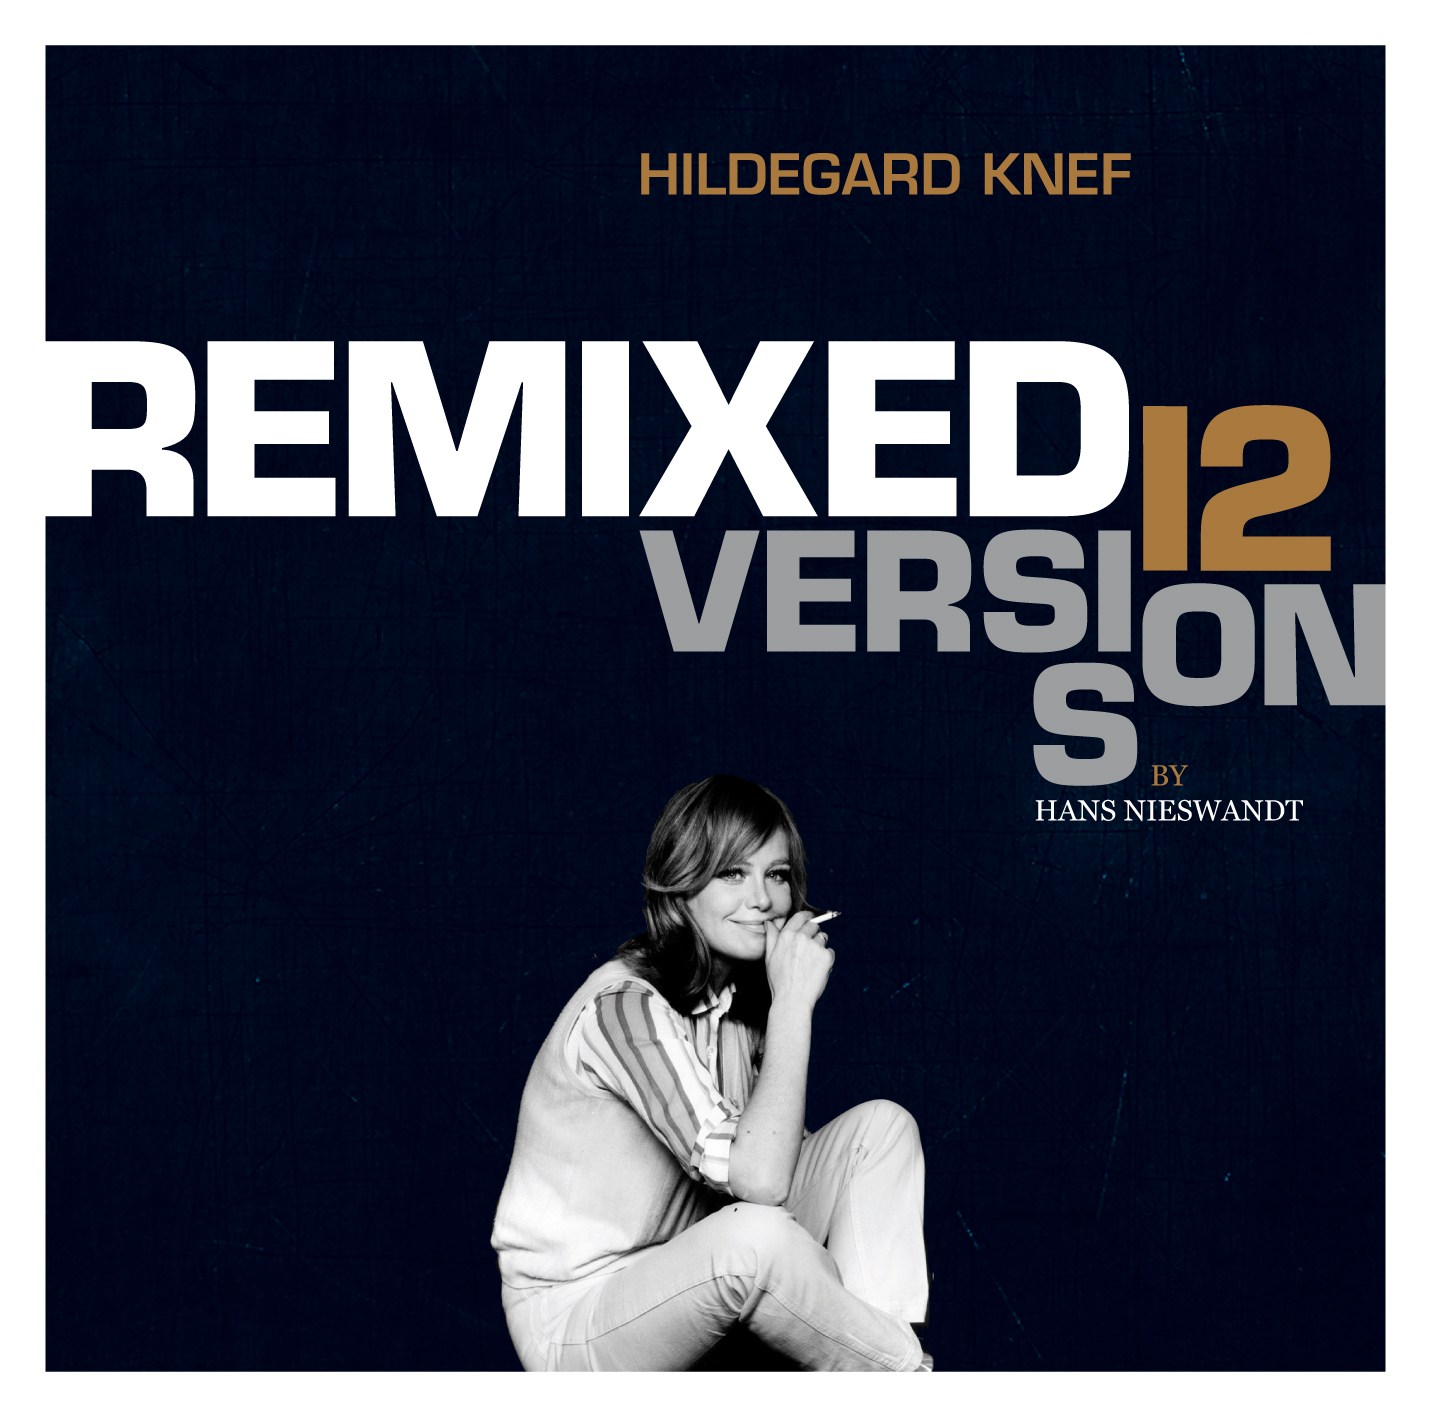 Hildegard Knef – Remixed 12 Versions by Hans Nieswandt